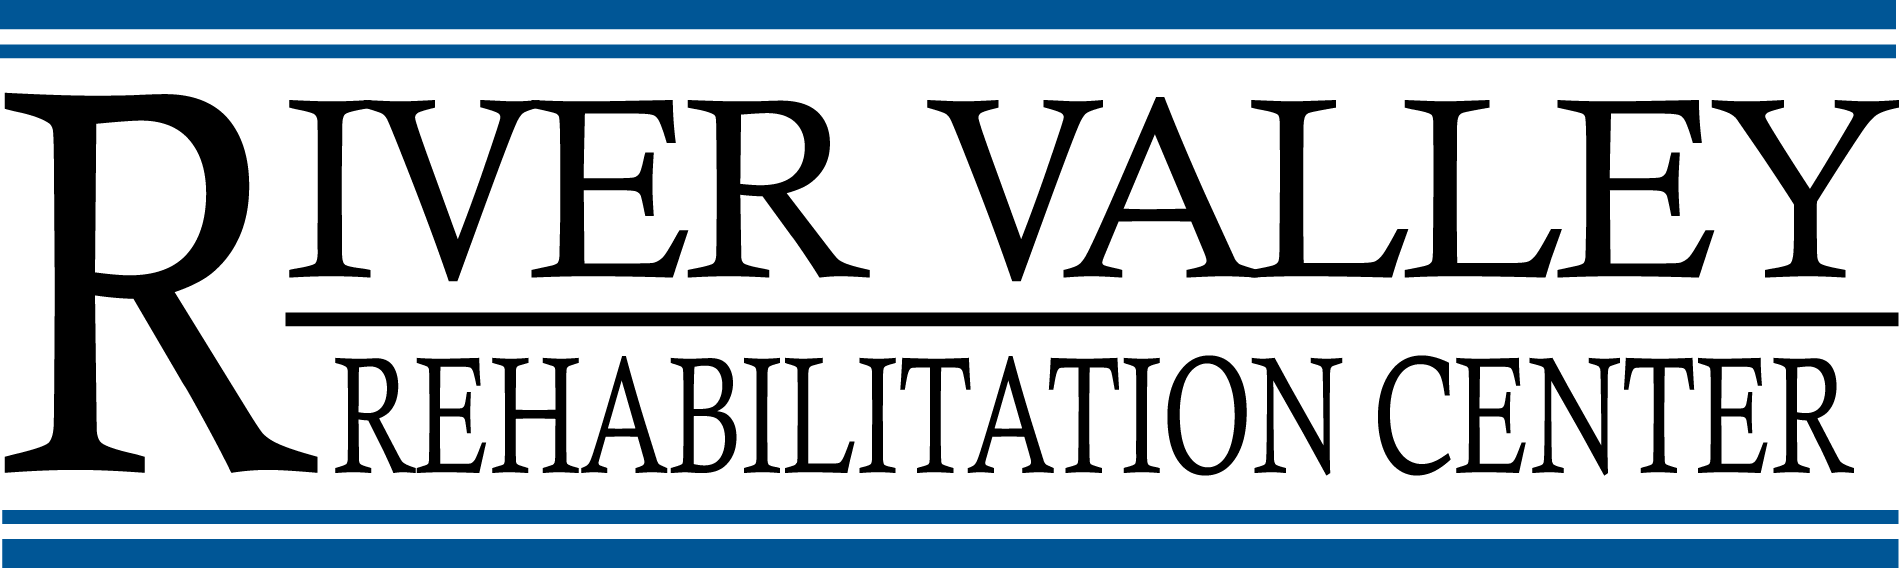 River Valley Rehabilitation Center logo